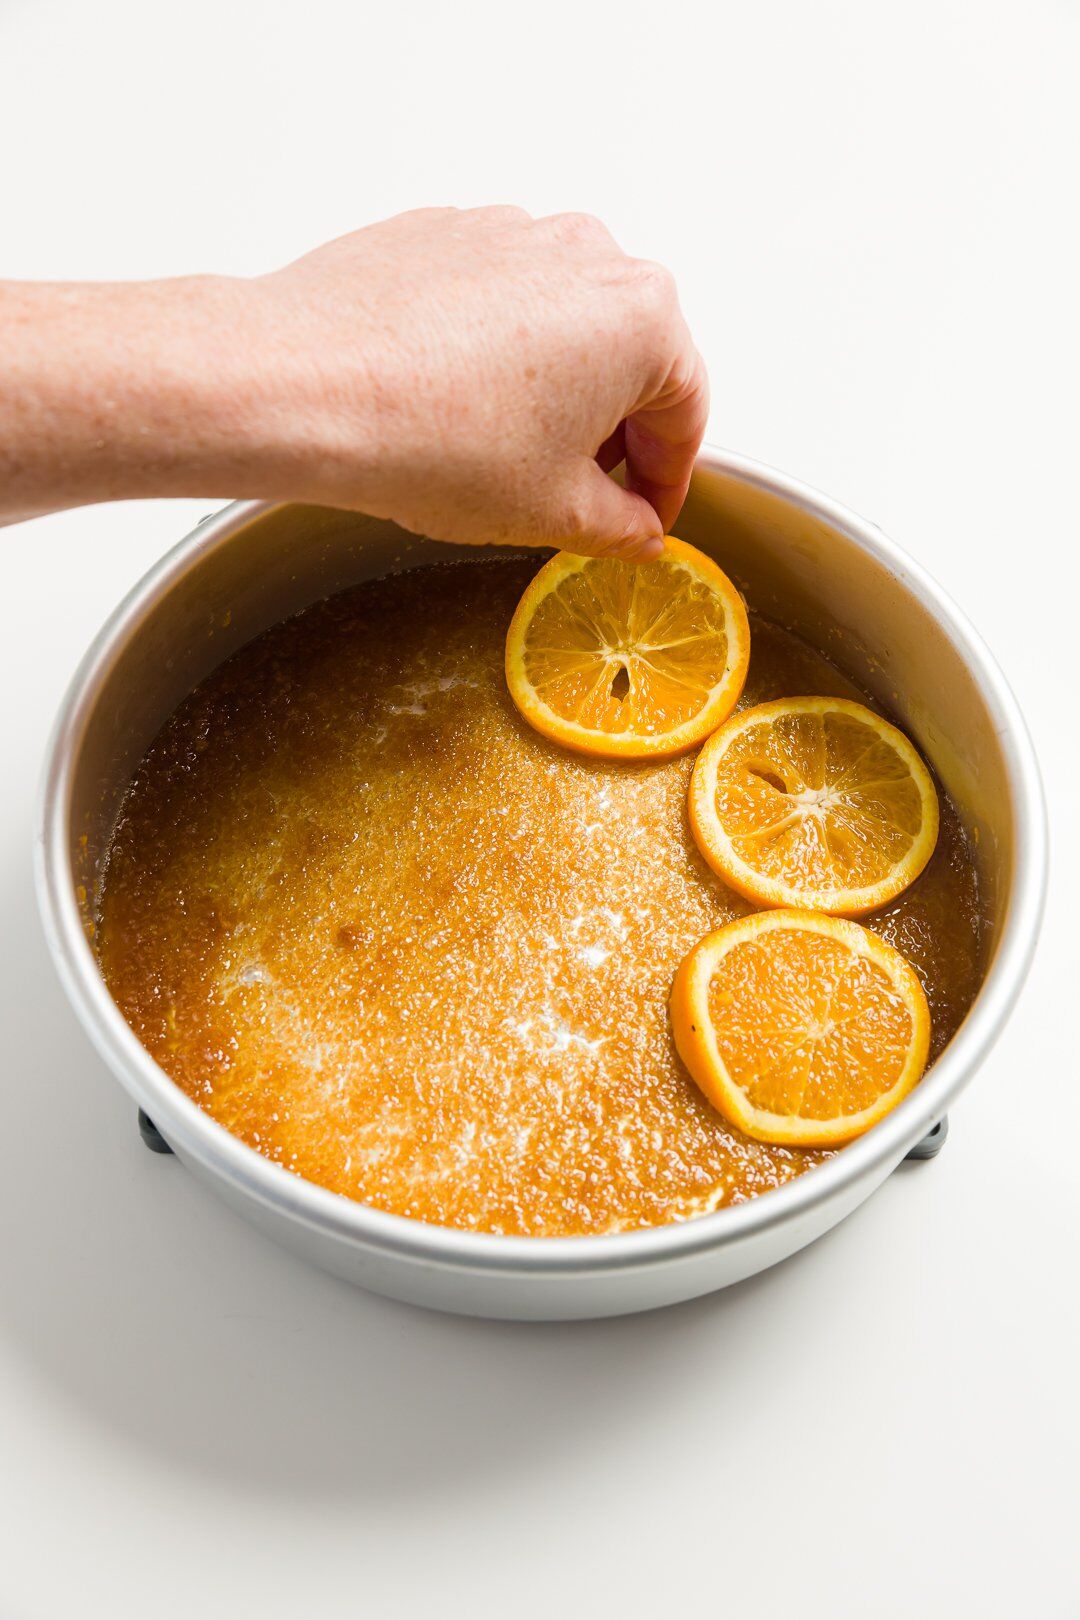 Placing sliced oranges in the pan